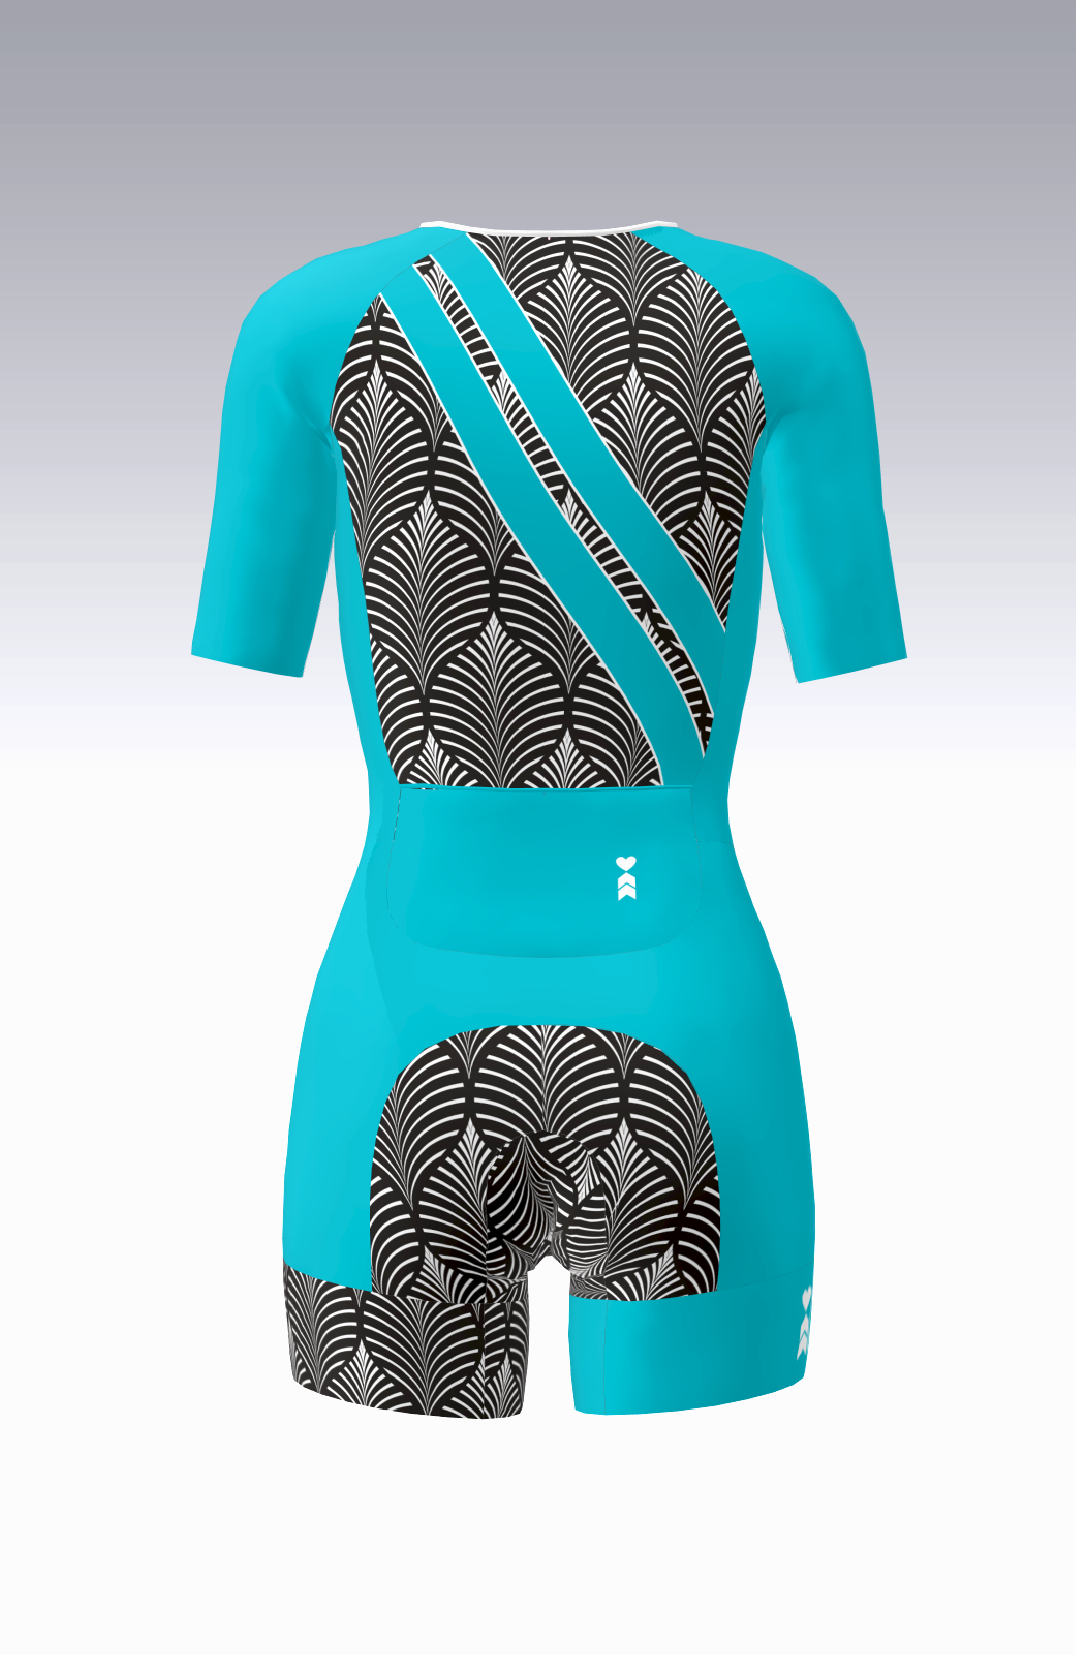 Coeur Sports Sleeved Tri Suit PRESALE! Filigree Women's Sleeved One Piece Triathlon Suit